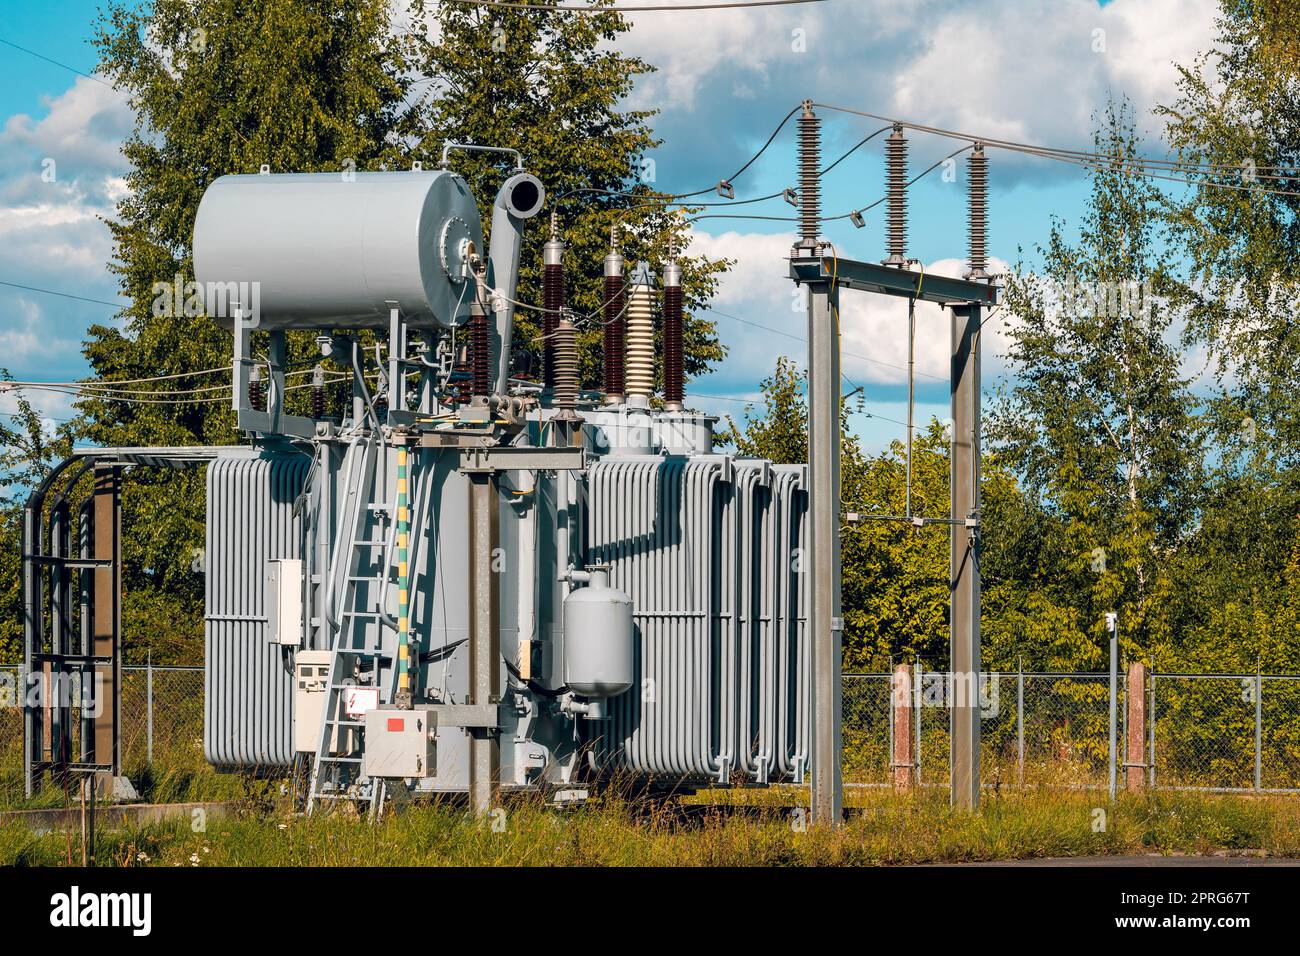 Power Transformer in substation Stock Photo